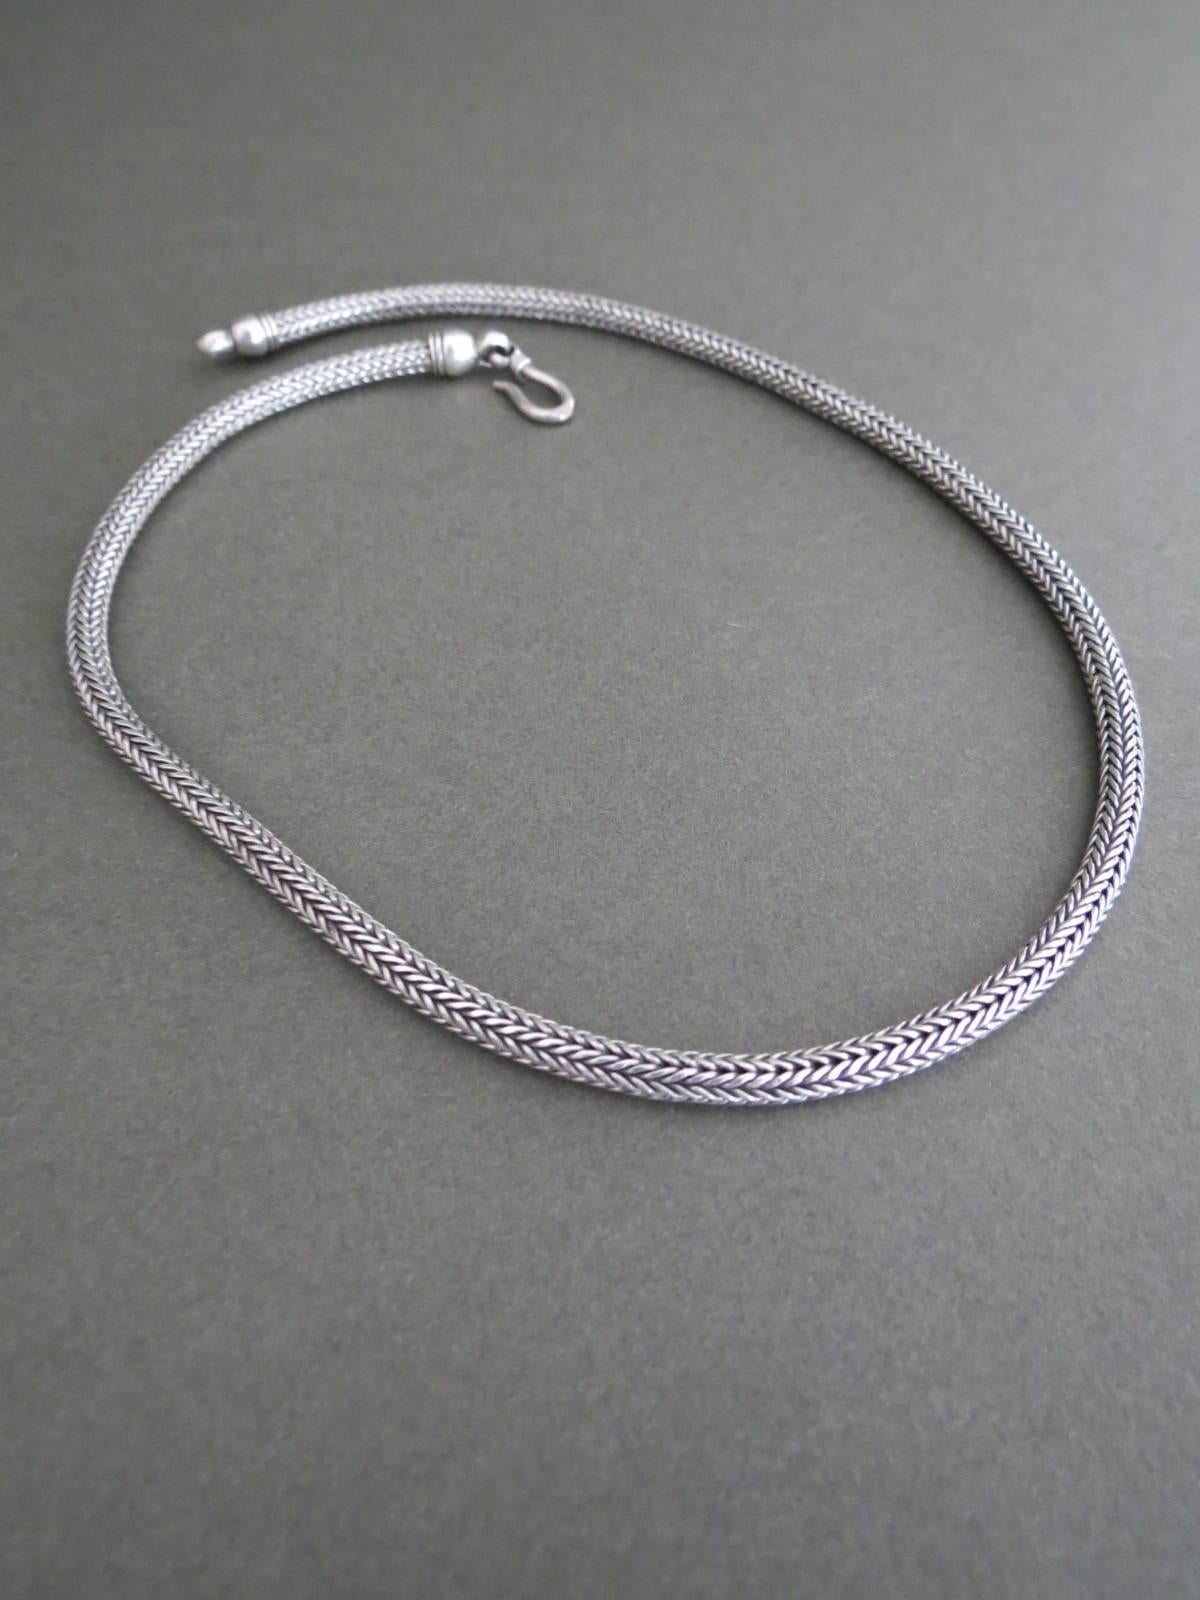 Vintage Sterling Silver Danish Modernist Snakeskin Necklace. Lovely pattern and hallmarked .
Item Specifics
Length: 45cm (approx 17.50